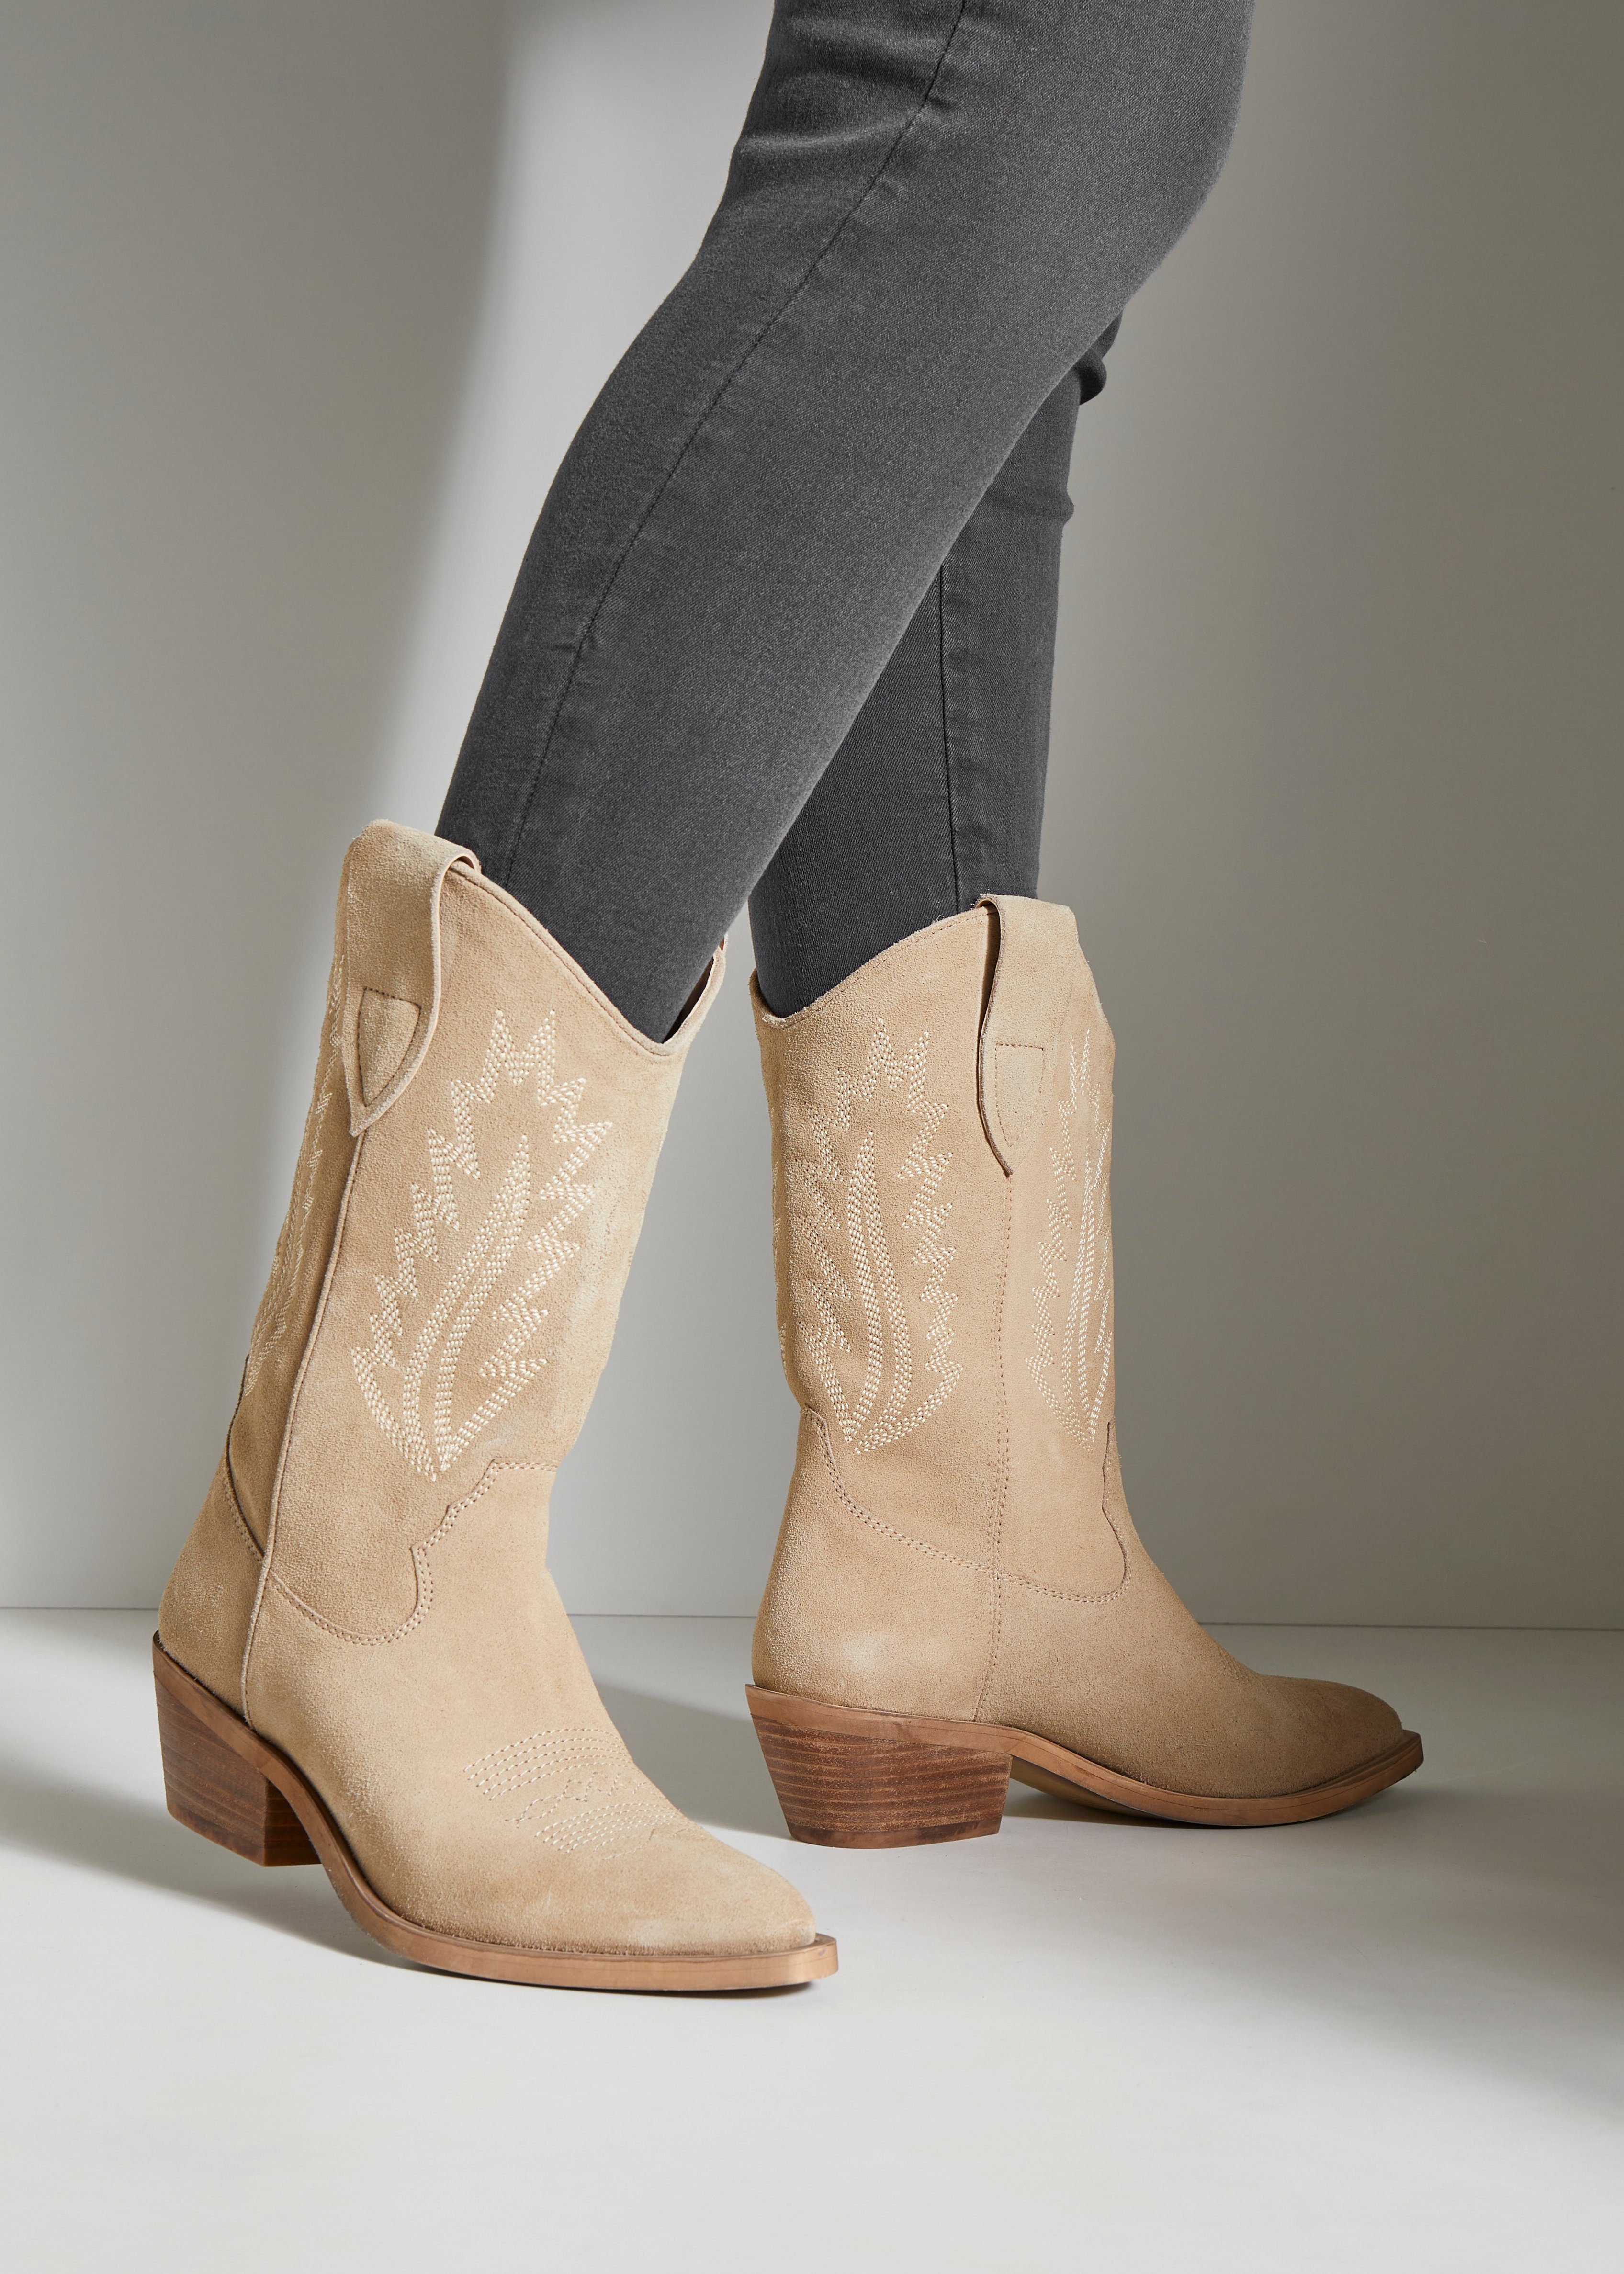 hochwertigem Boots Stiefel, Cowboy Stiefelette, Ankleboots aus Western Leder Cowboy LASCANA